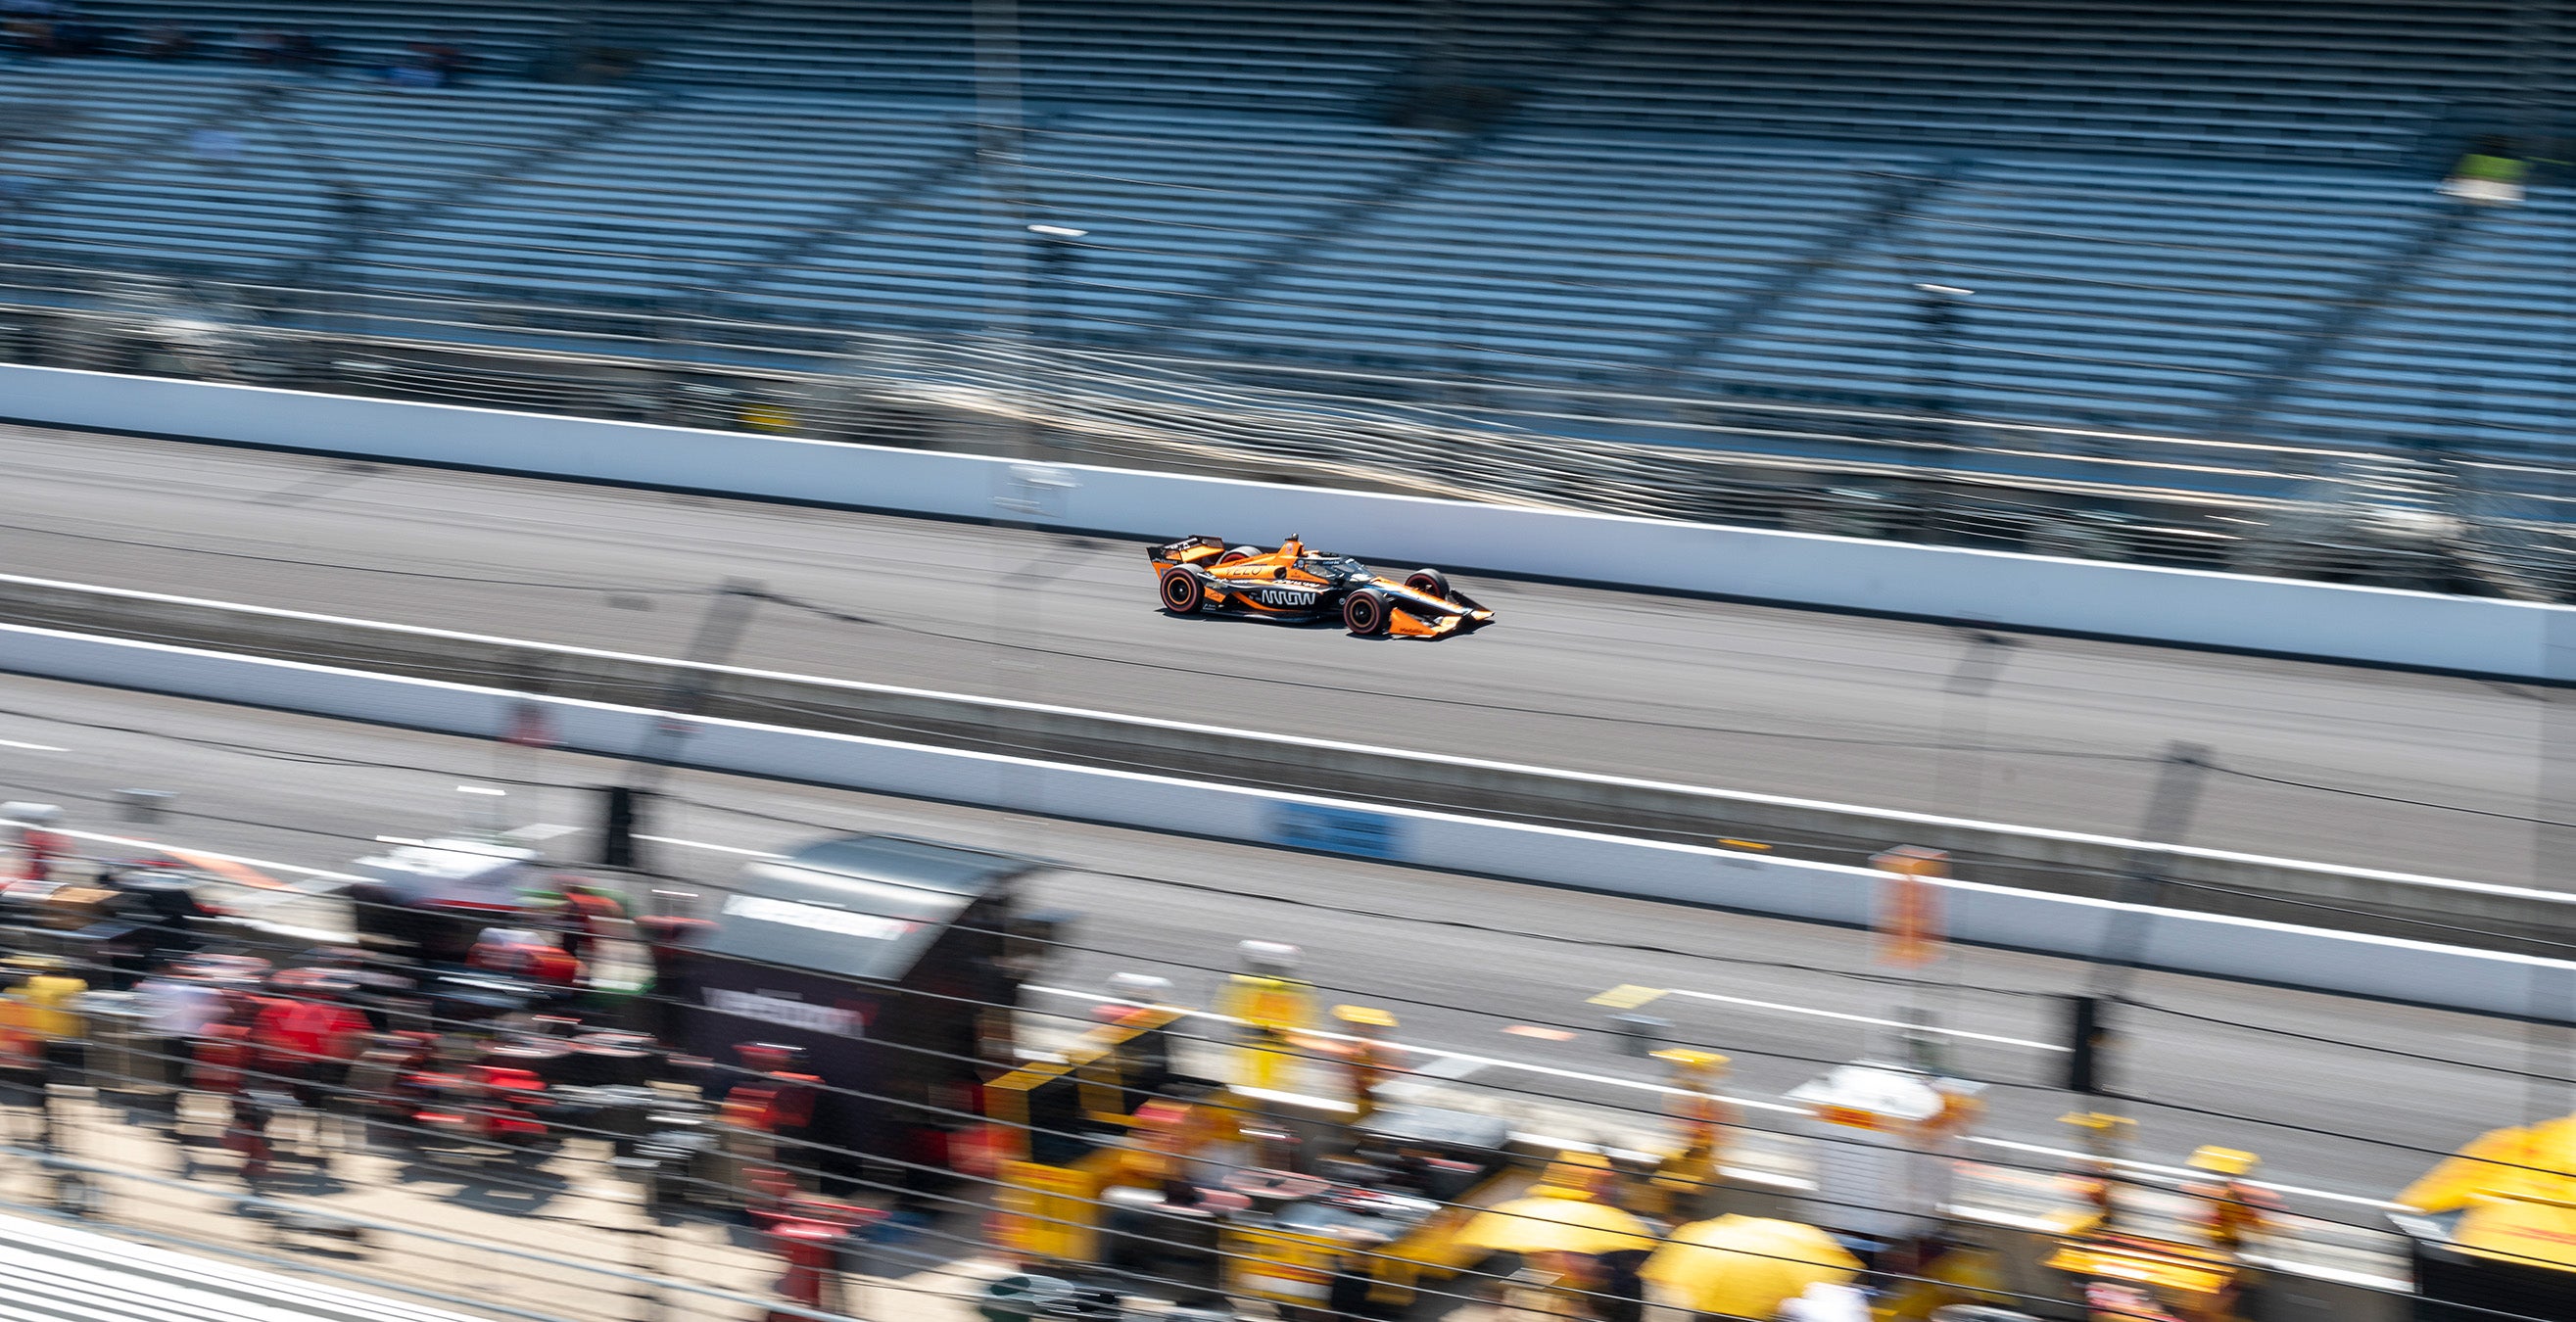 Pitt crews and stands are blurred around the orange No. 5 IndyCar